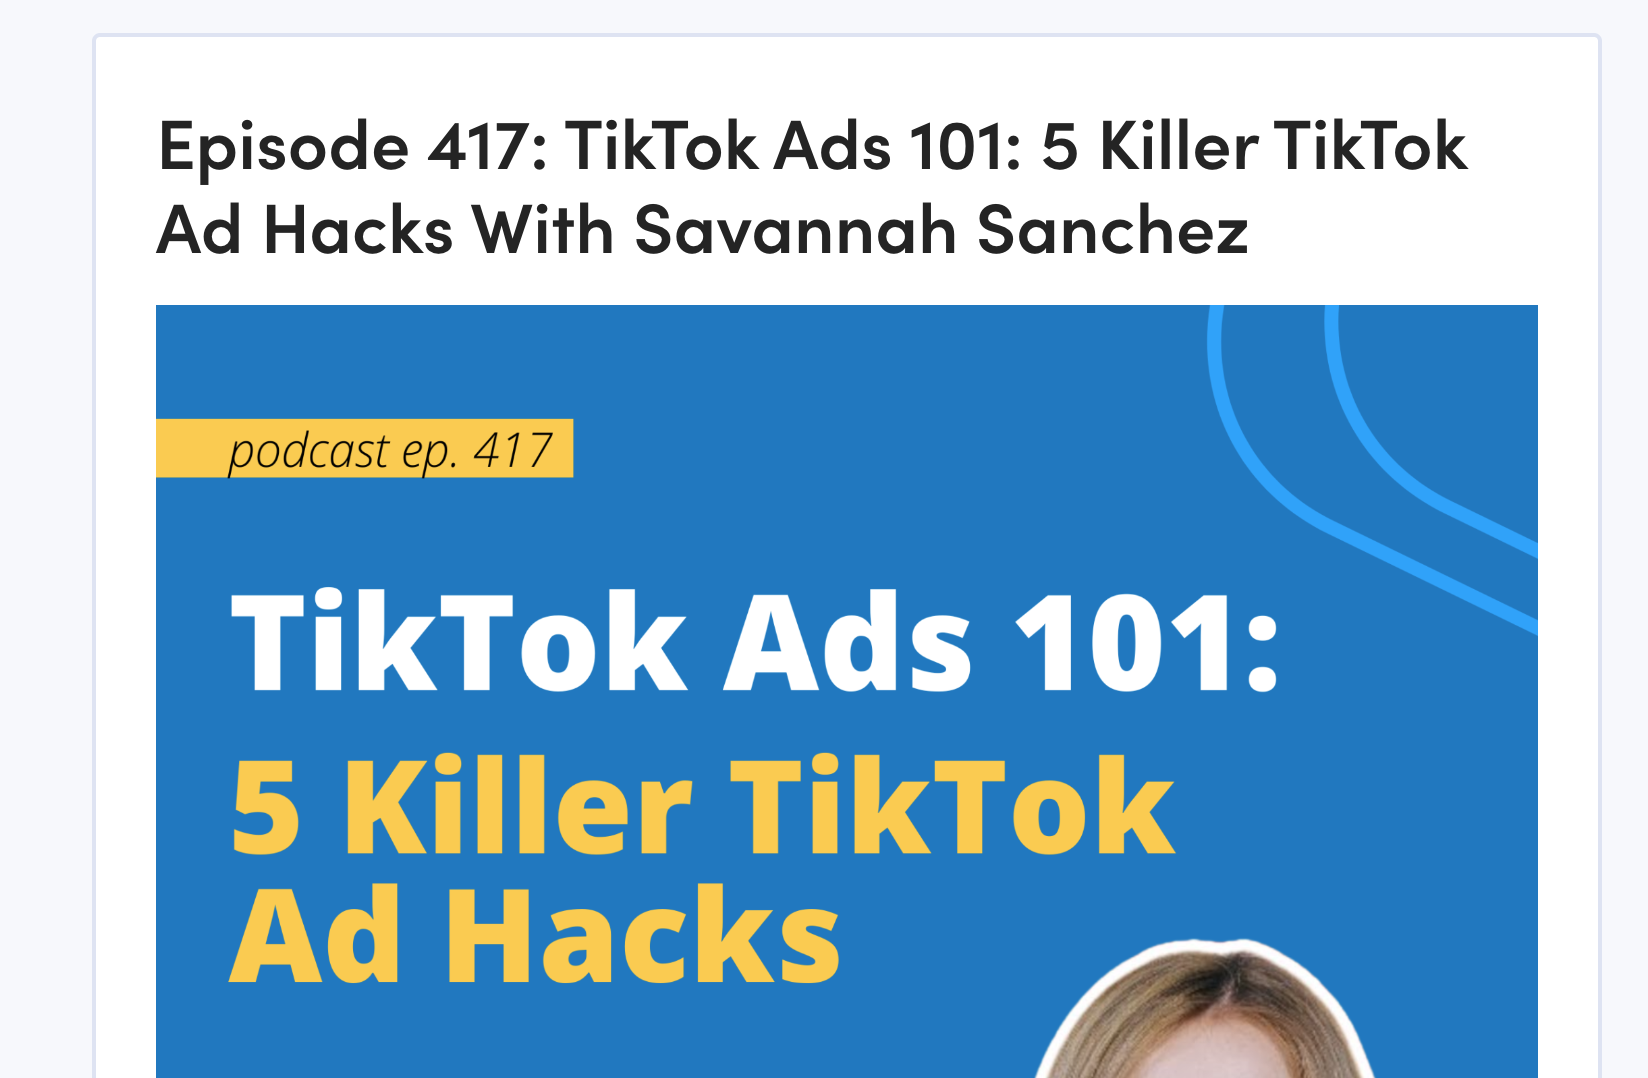 5 Killer TikTok Ad Hacks With Savannah Sanchez